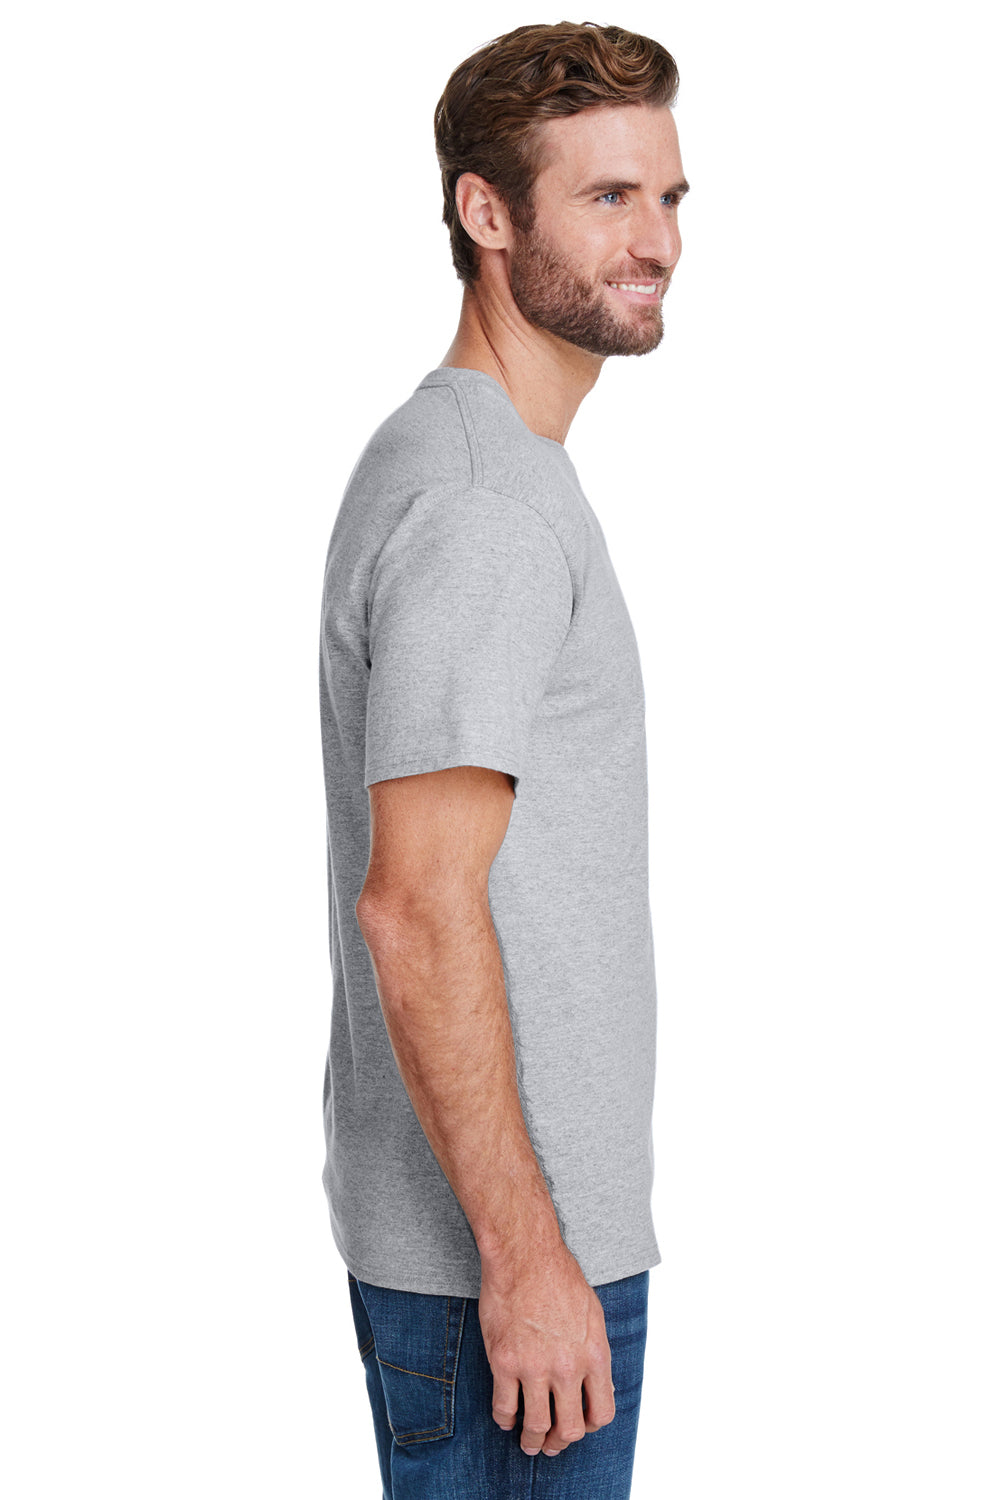 Hanes W110 Mens Workwear Short Sleeve Crewneck T-Shirt w/ Pocket Light Steel Grey Side